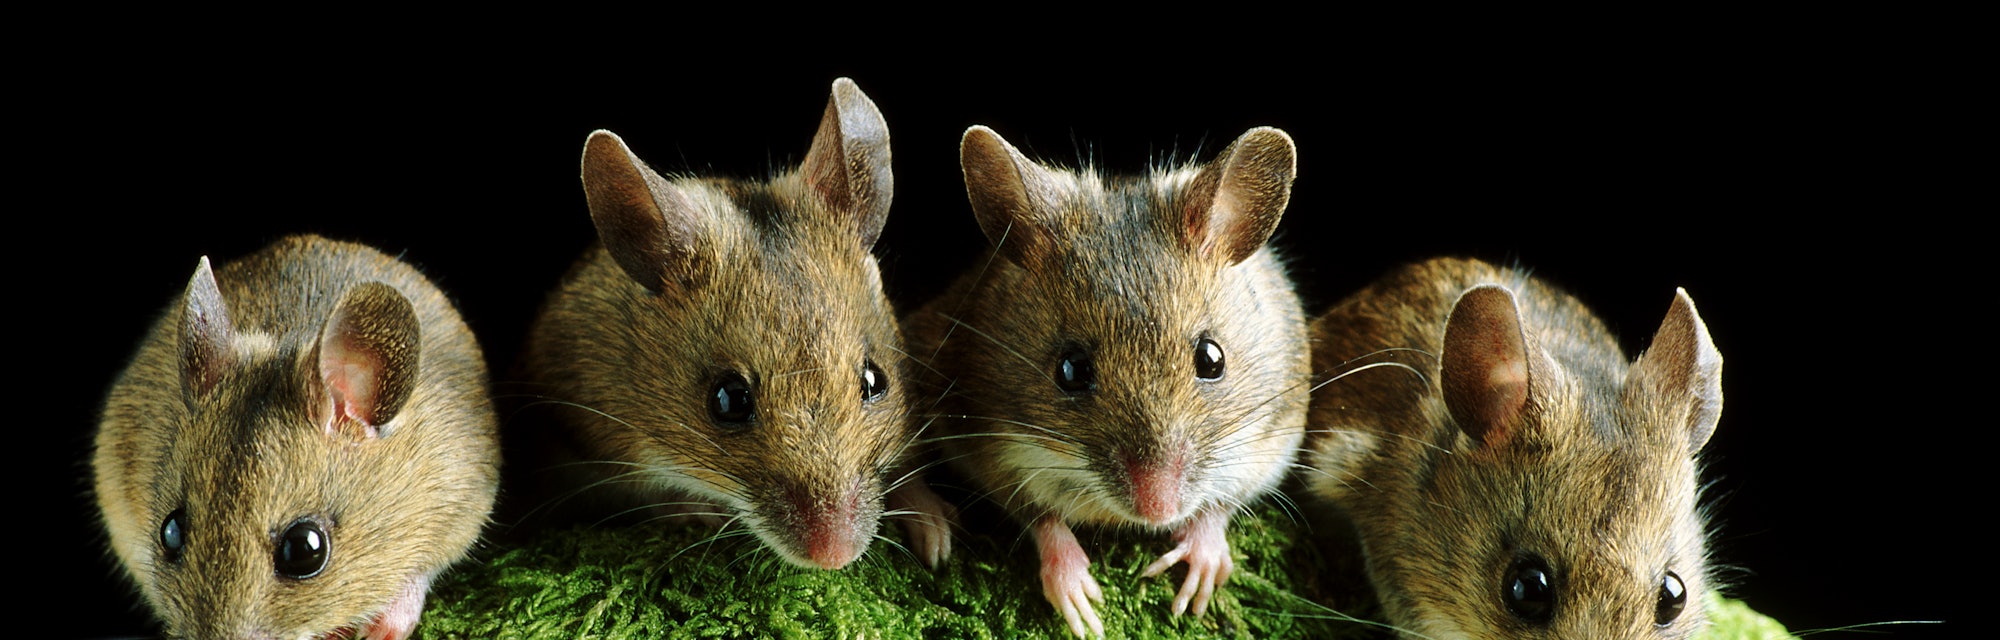 Three mice sitting on grass